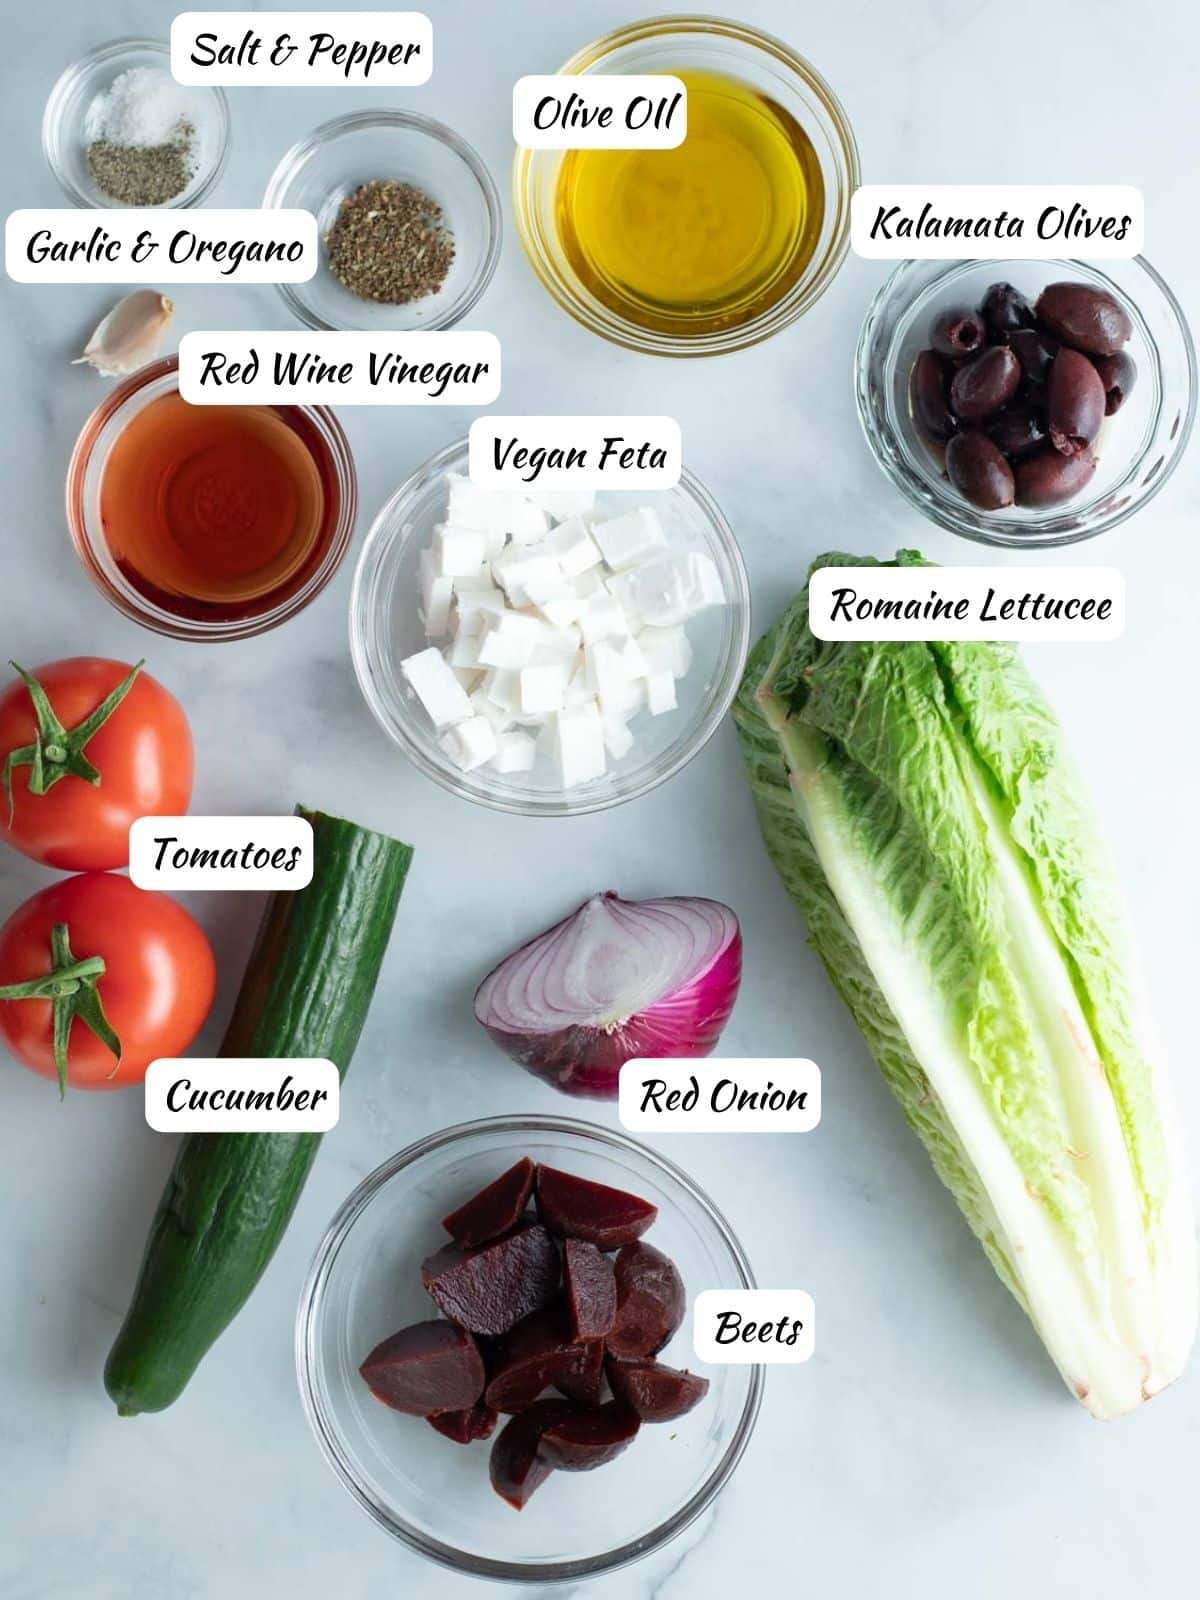 Vegan Greek Salad Ingredients: salt, pepper, oregano, olive oil, garlic, kalamata olives, romaine lettuce, beets, red onion, vegan feta, cucumber, tomatoes. 